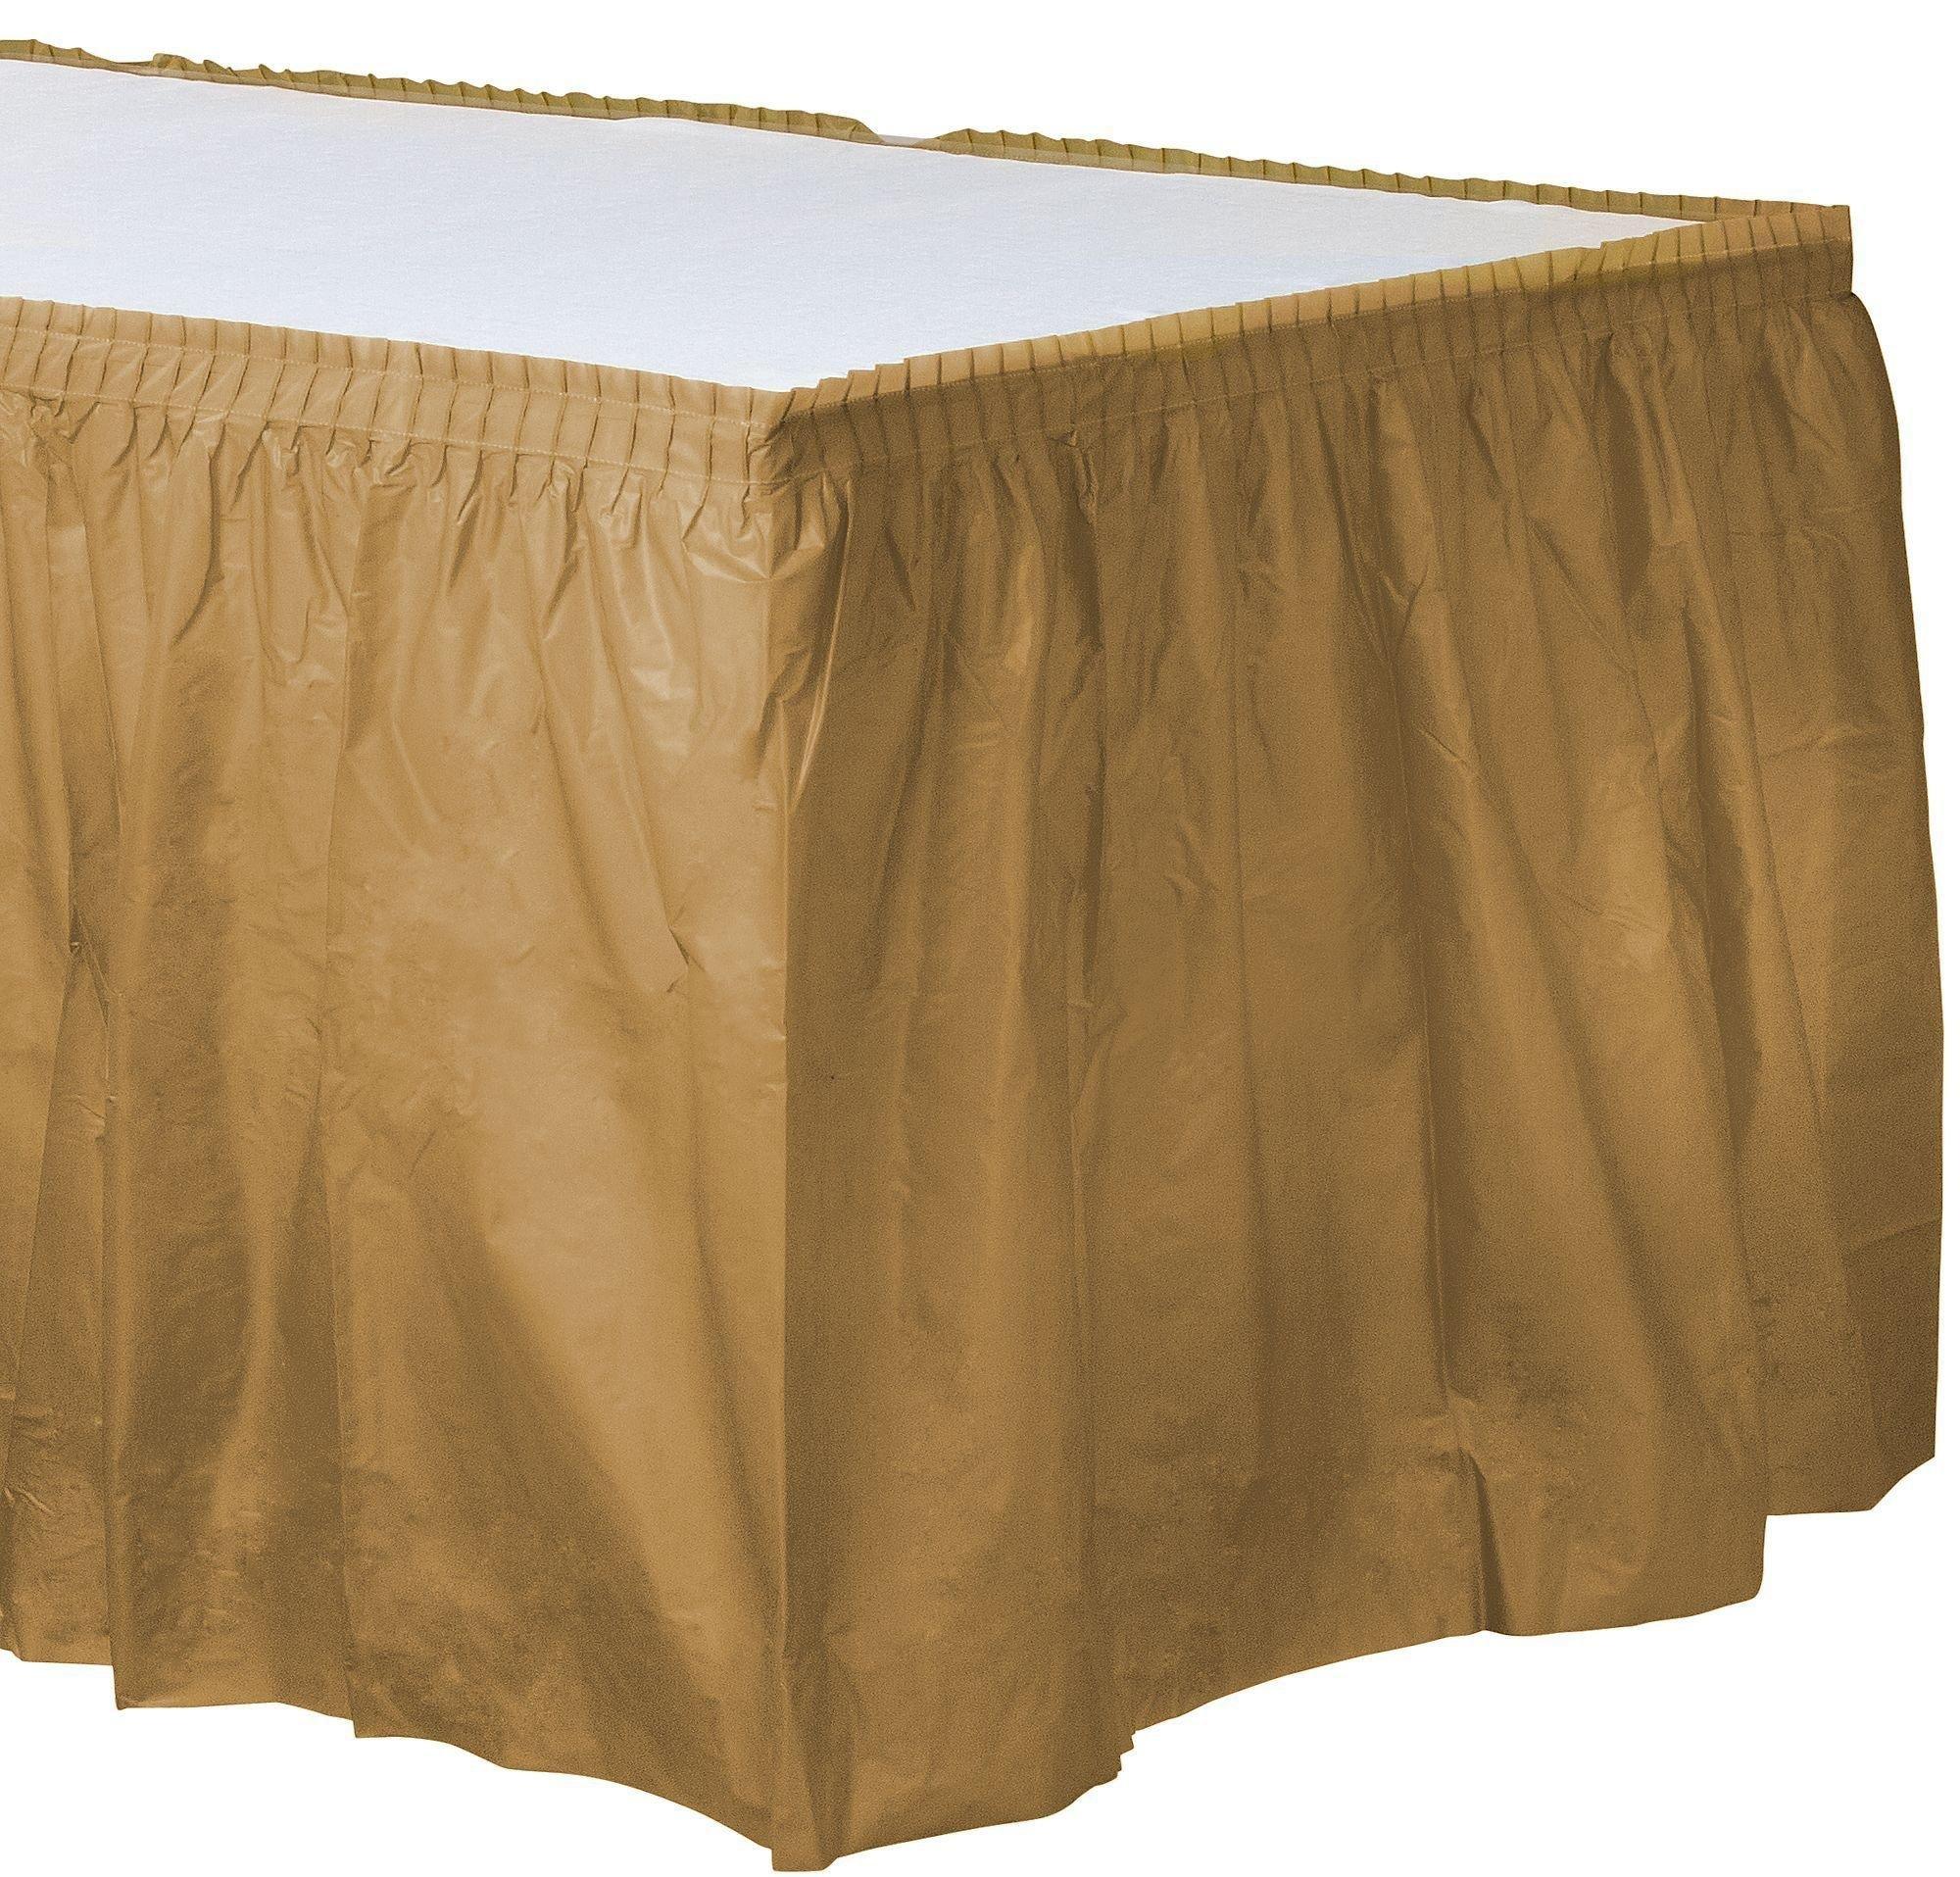 Gold Plastic Table Skirt, 21ft x 29in